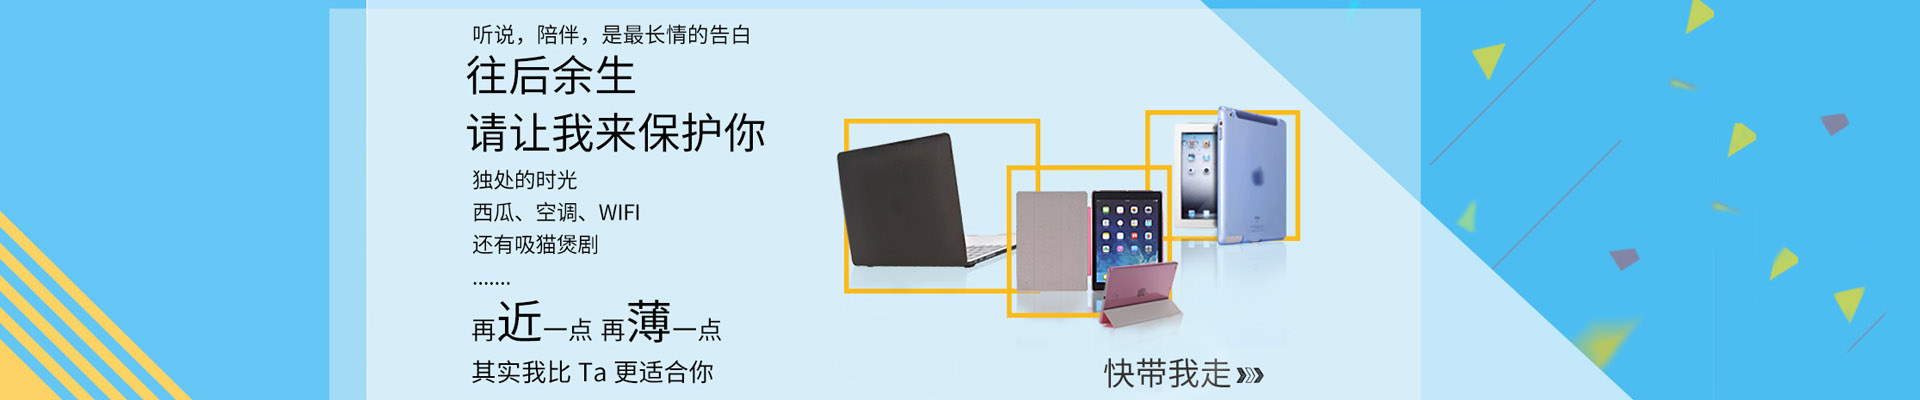 iPadmini4全包tpu保护壳-tpu款-东莞市成康电子有限公司